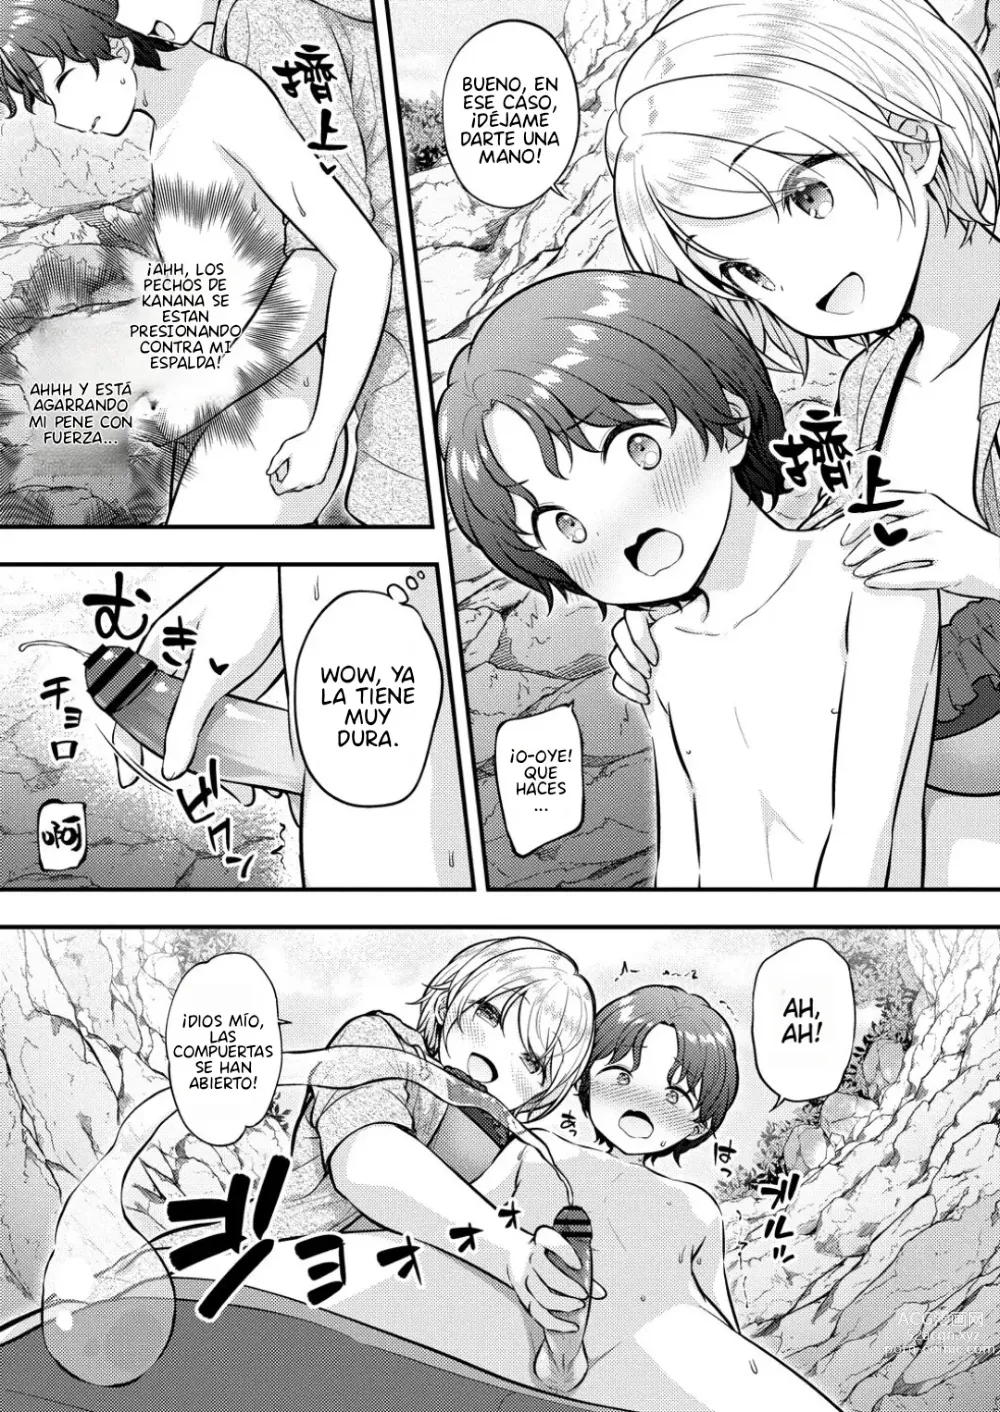 Page 5 of manga Una aventura de Verano.